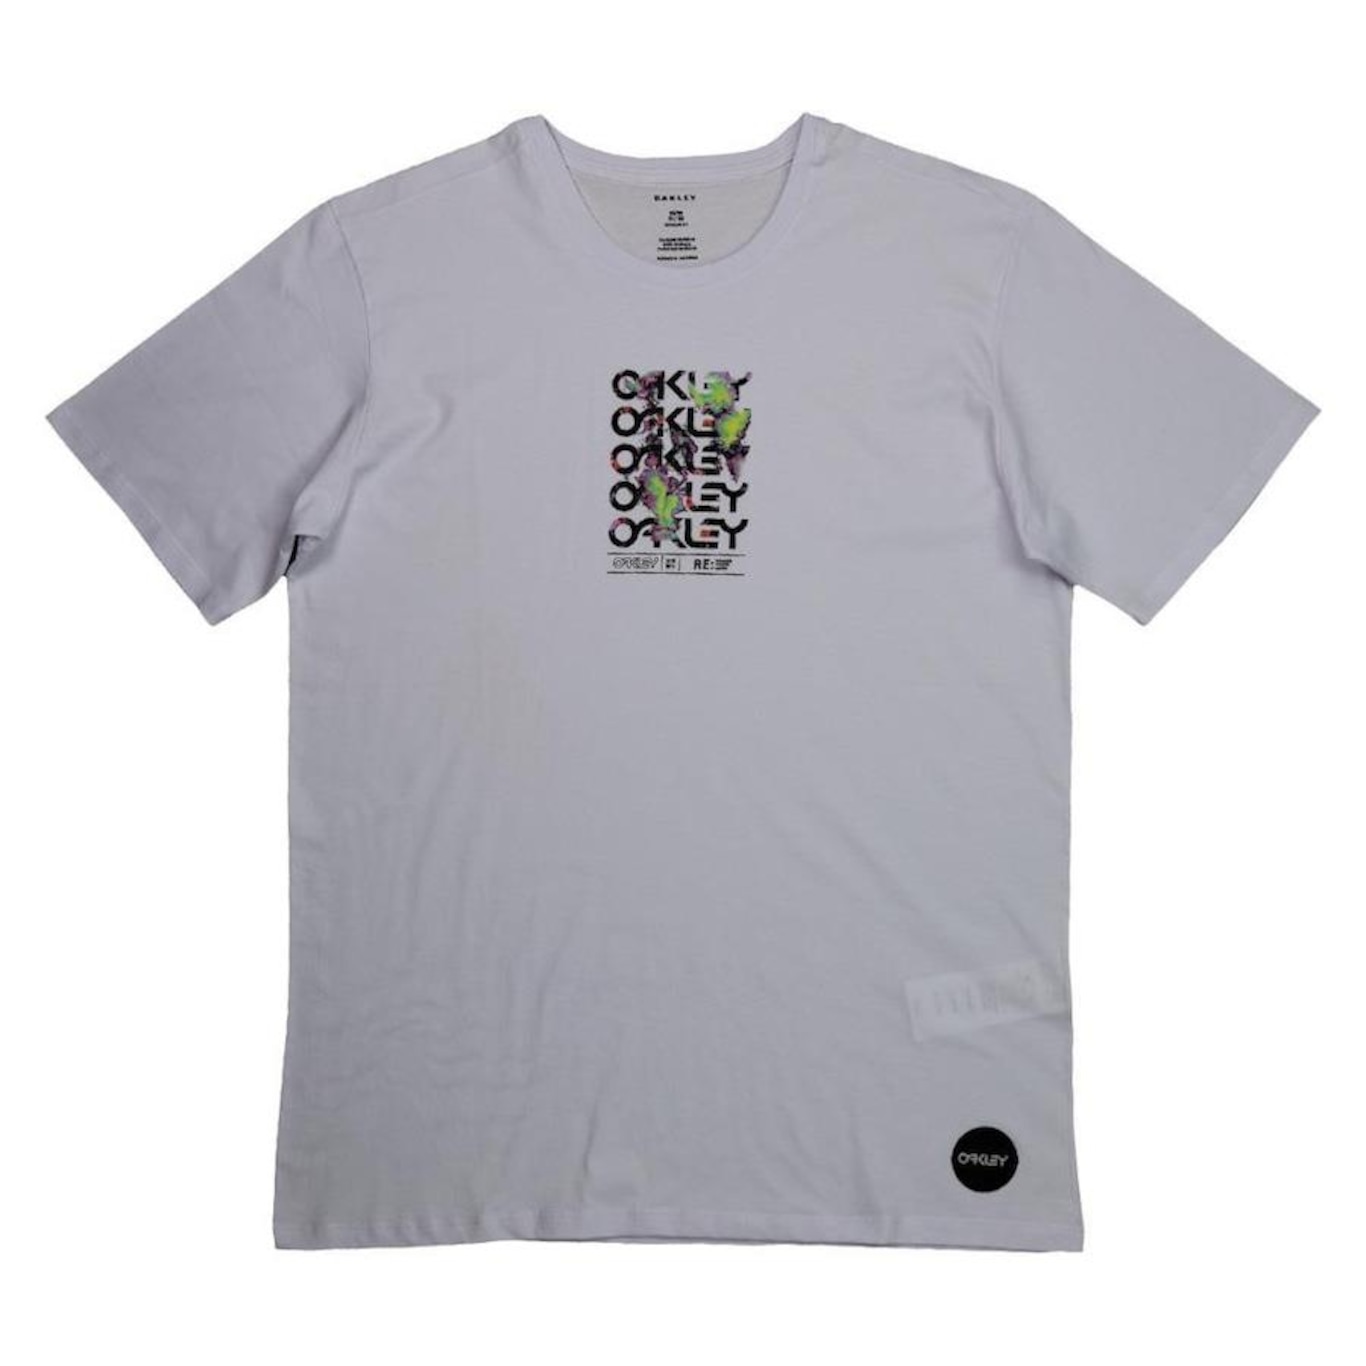 Camiseta Oakley Mod Jellyfish Masculina - Preto